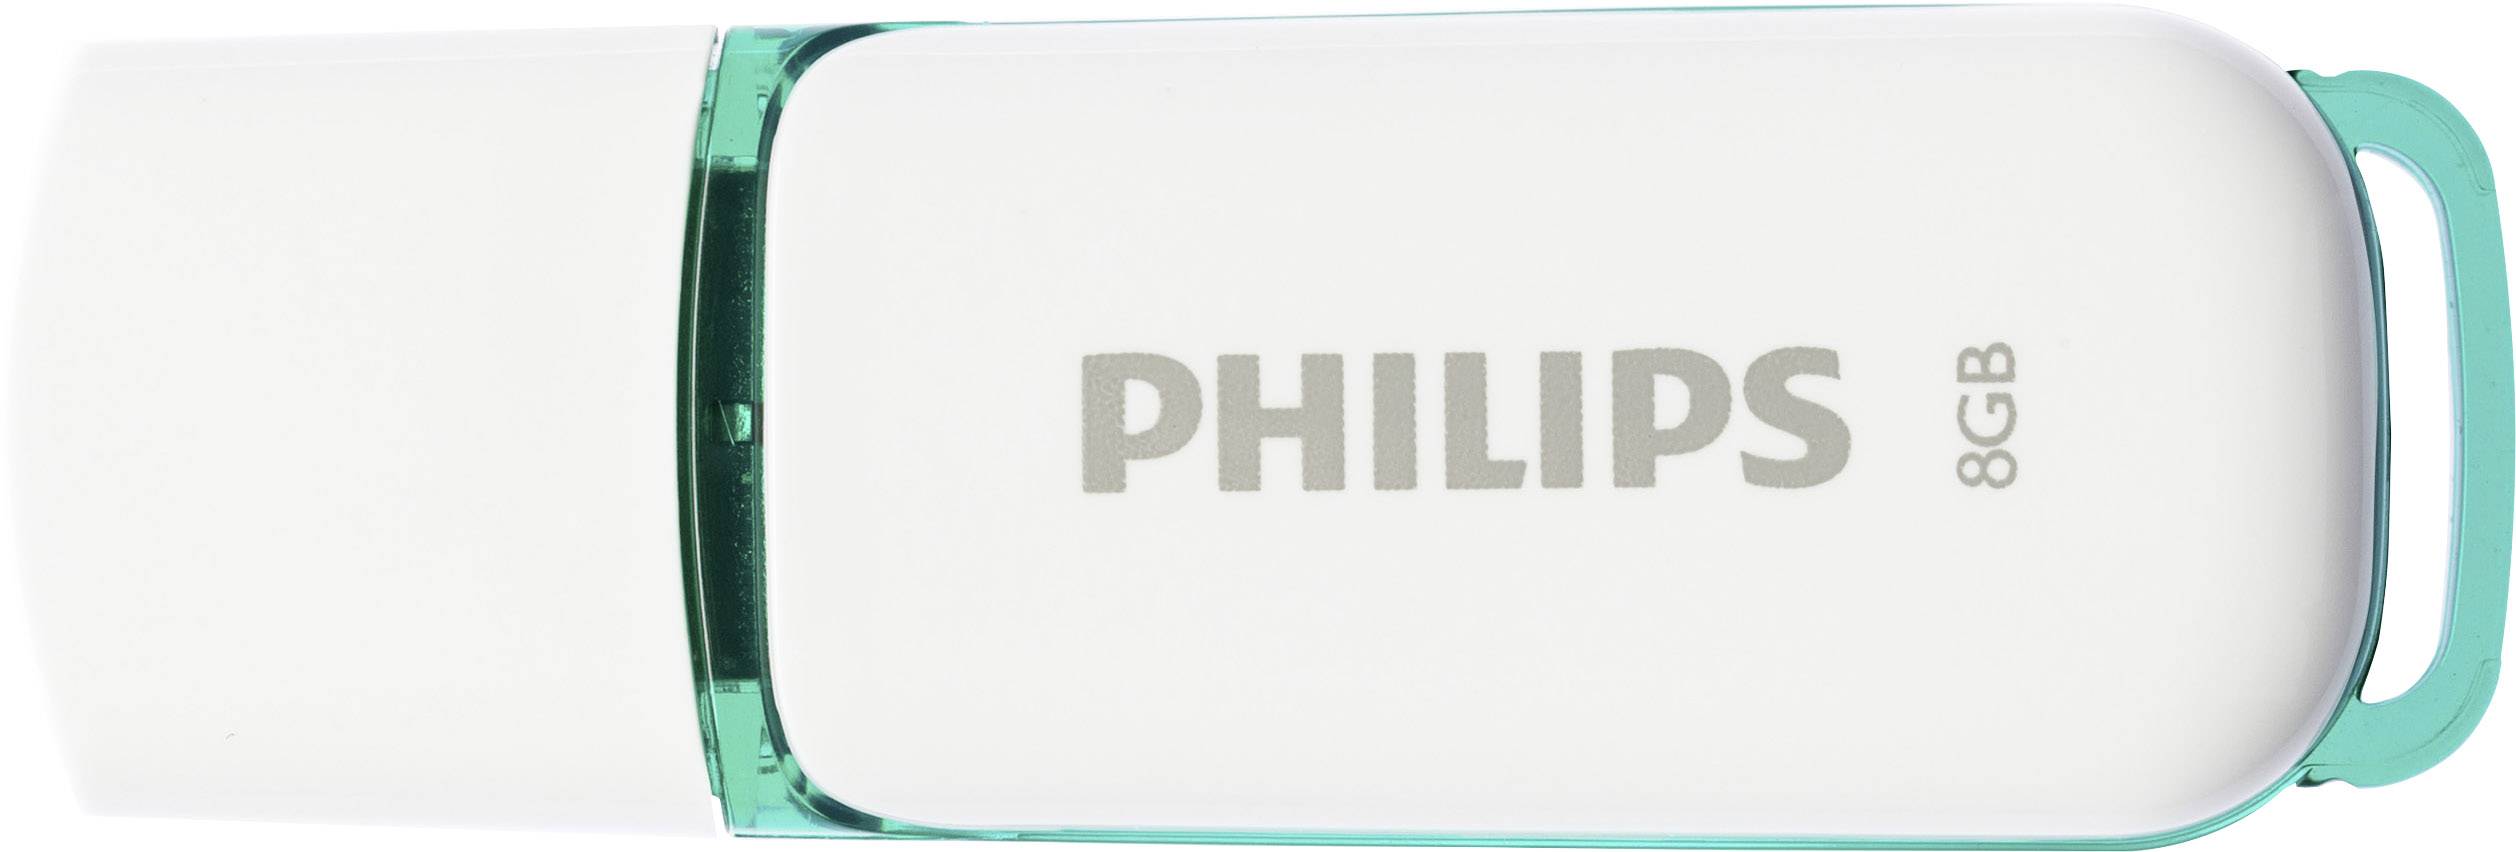 Unitate flash Philips Snow Edition 2.0 8 GB (FM08FD70B/00)